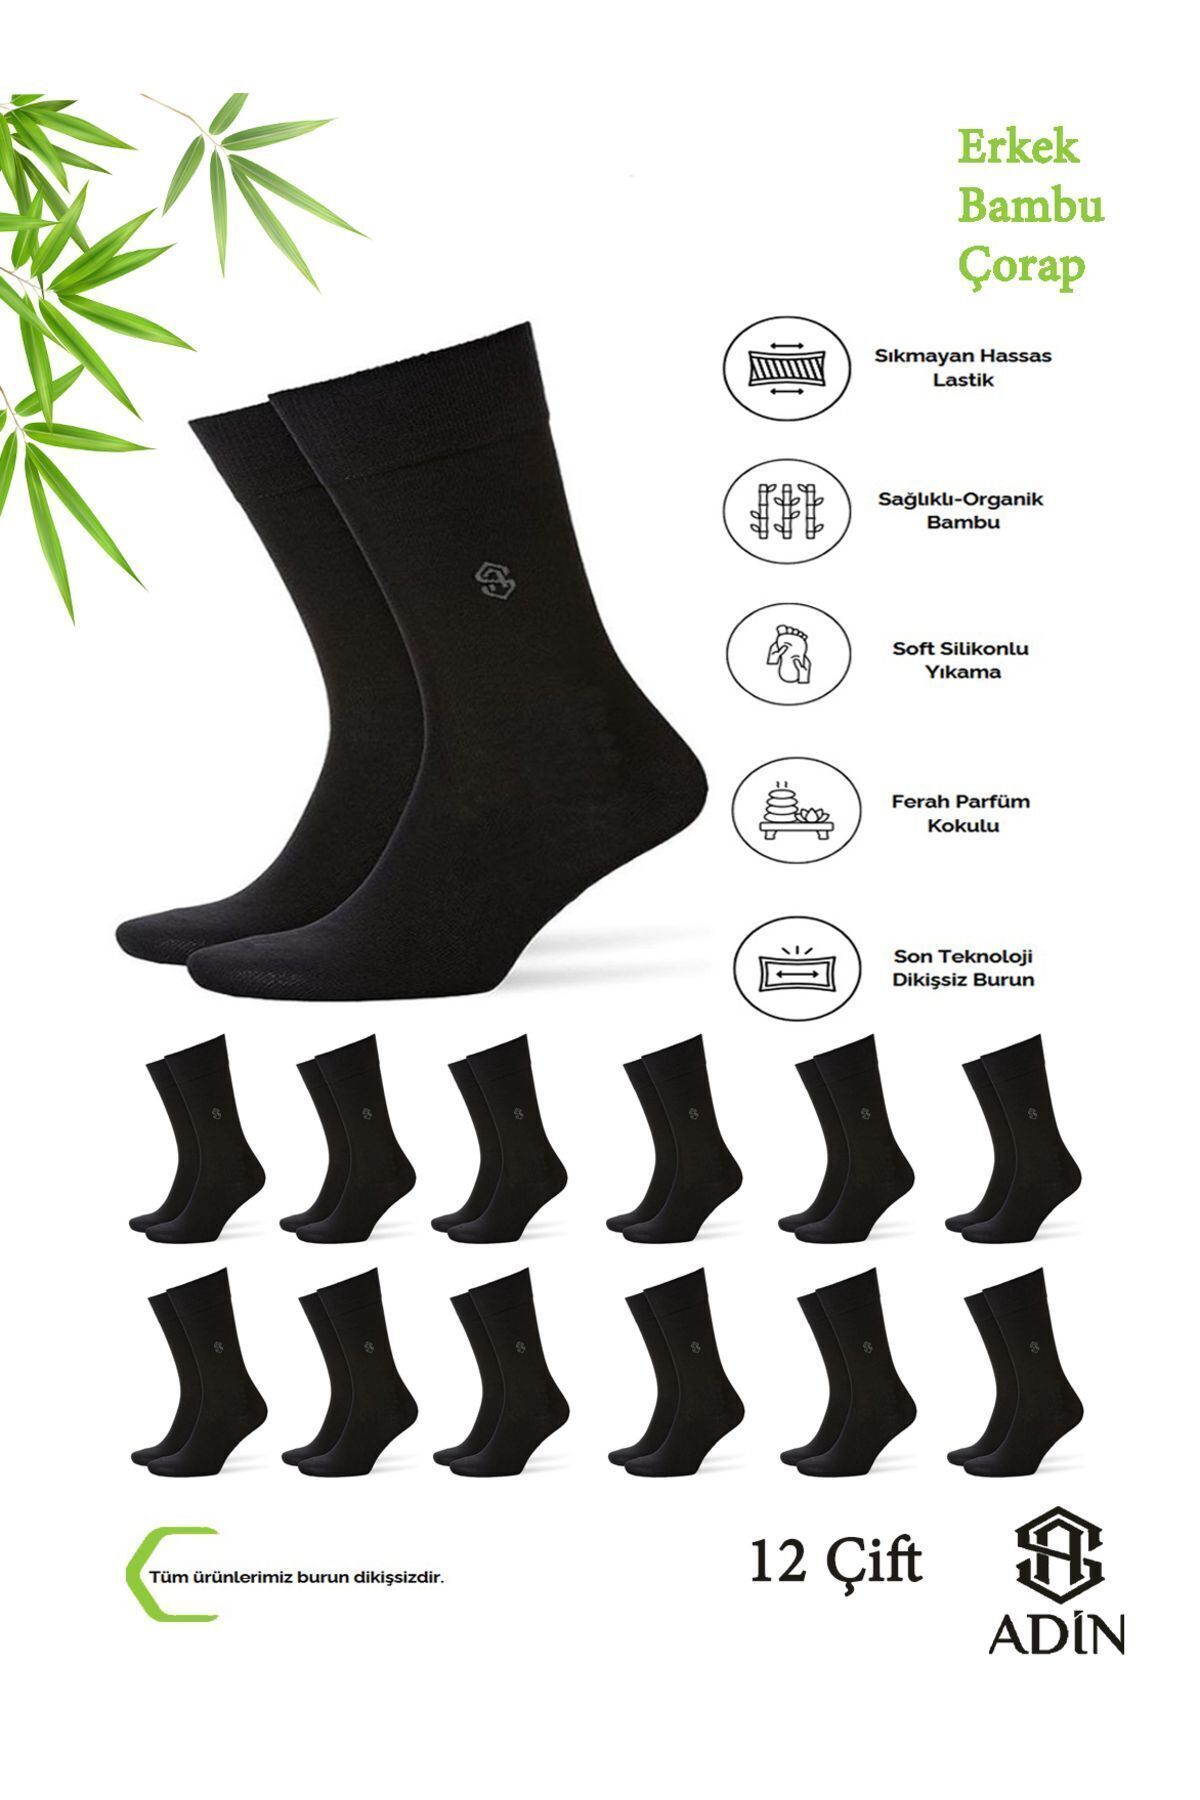 Adin Bambu Erkek Soket Çorap Dikişsiz Siyah 12’li (ALTIN SERİSİ)